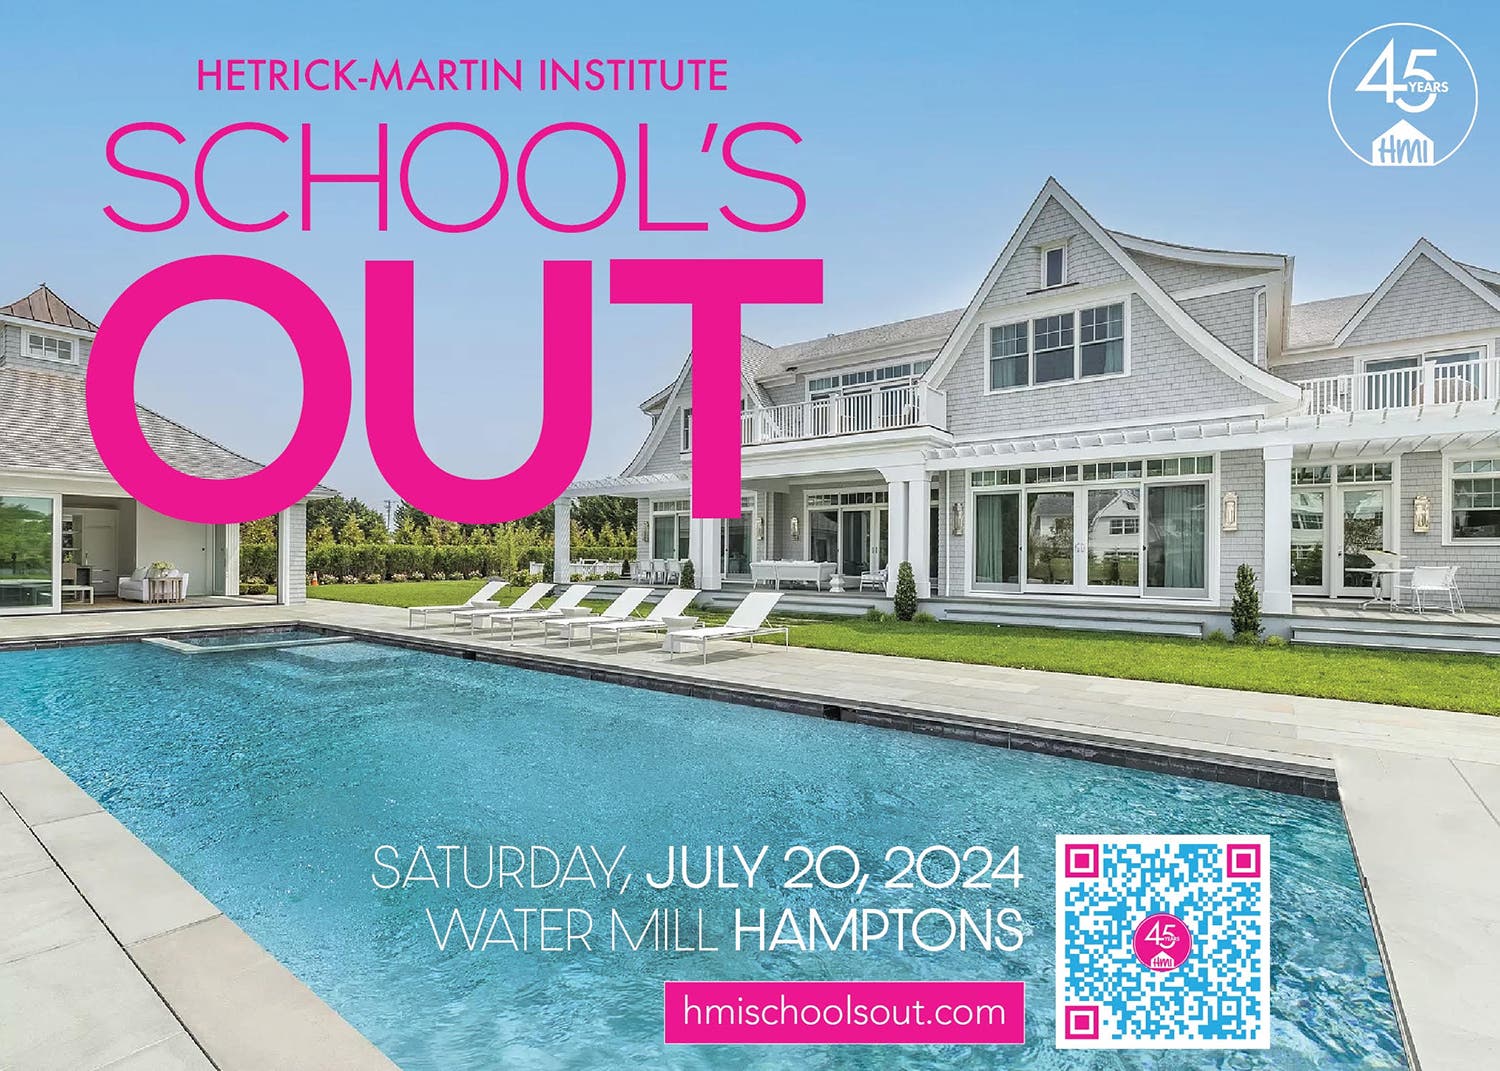 Hetrick-Martin Institute's ’School’s Out’ Benefit